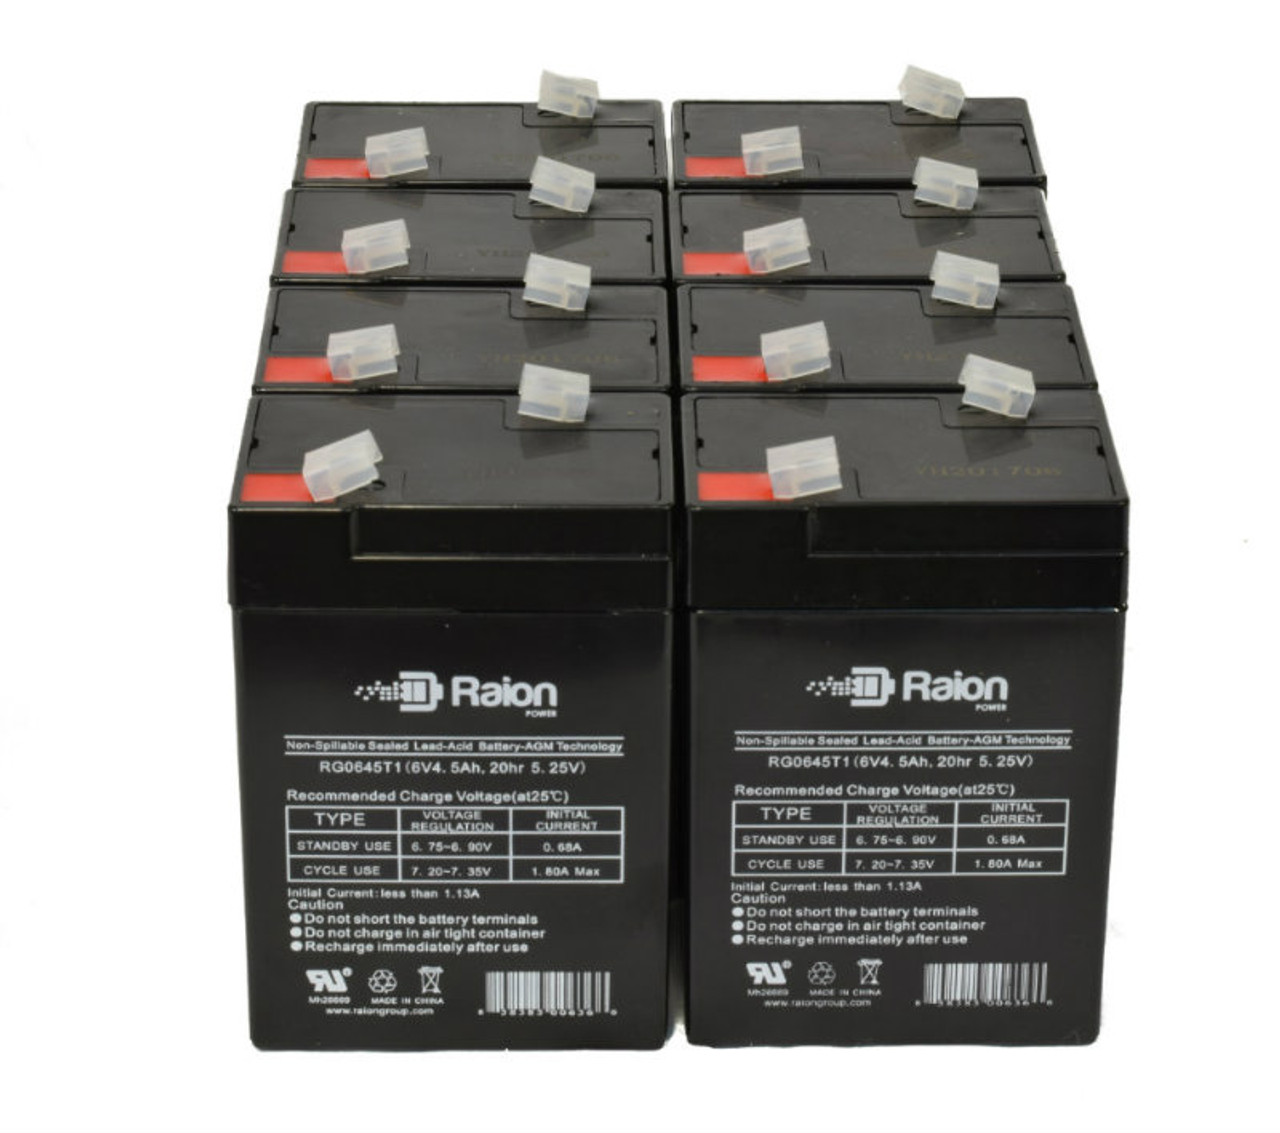 Raion Power 6V 4.5Ah Replacement Emergency Light Battery for Sonnenschein 7895391 - 8 Pack